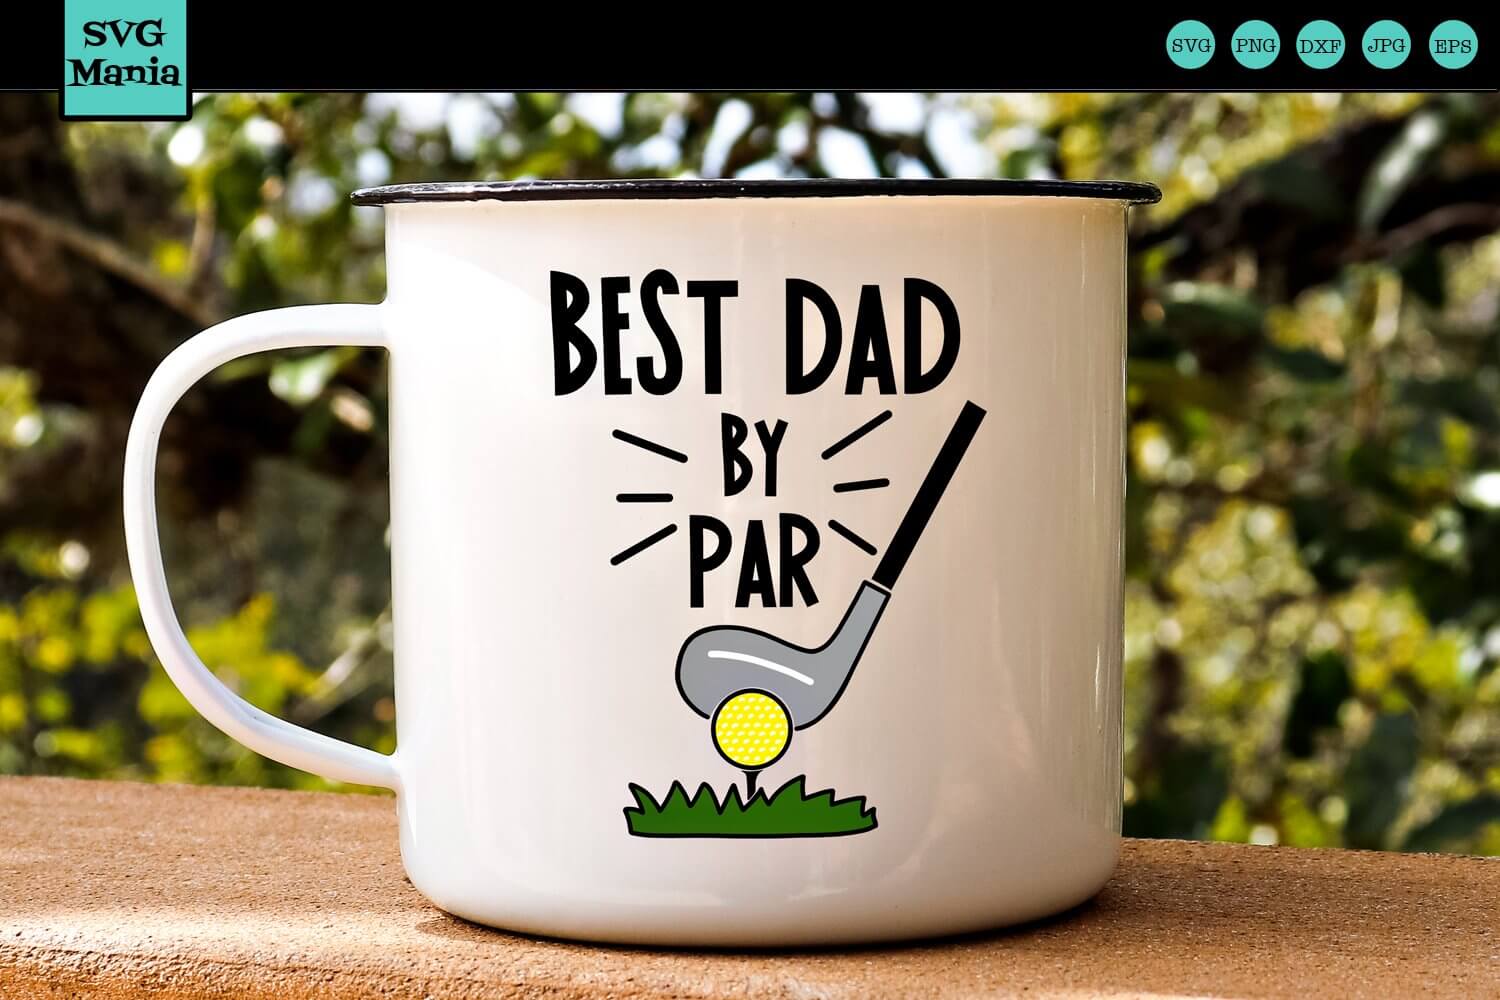 White cup of tea with inscription "Best dad by par".